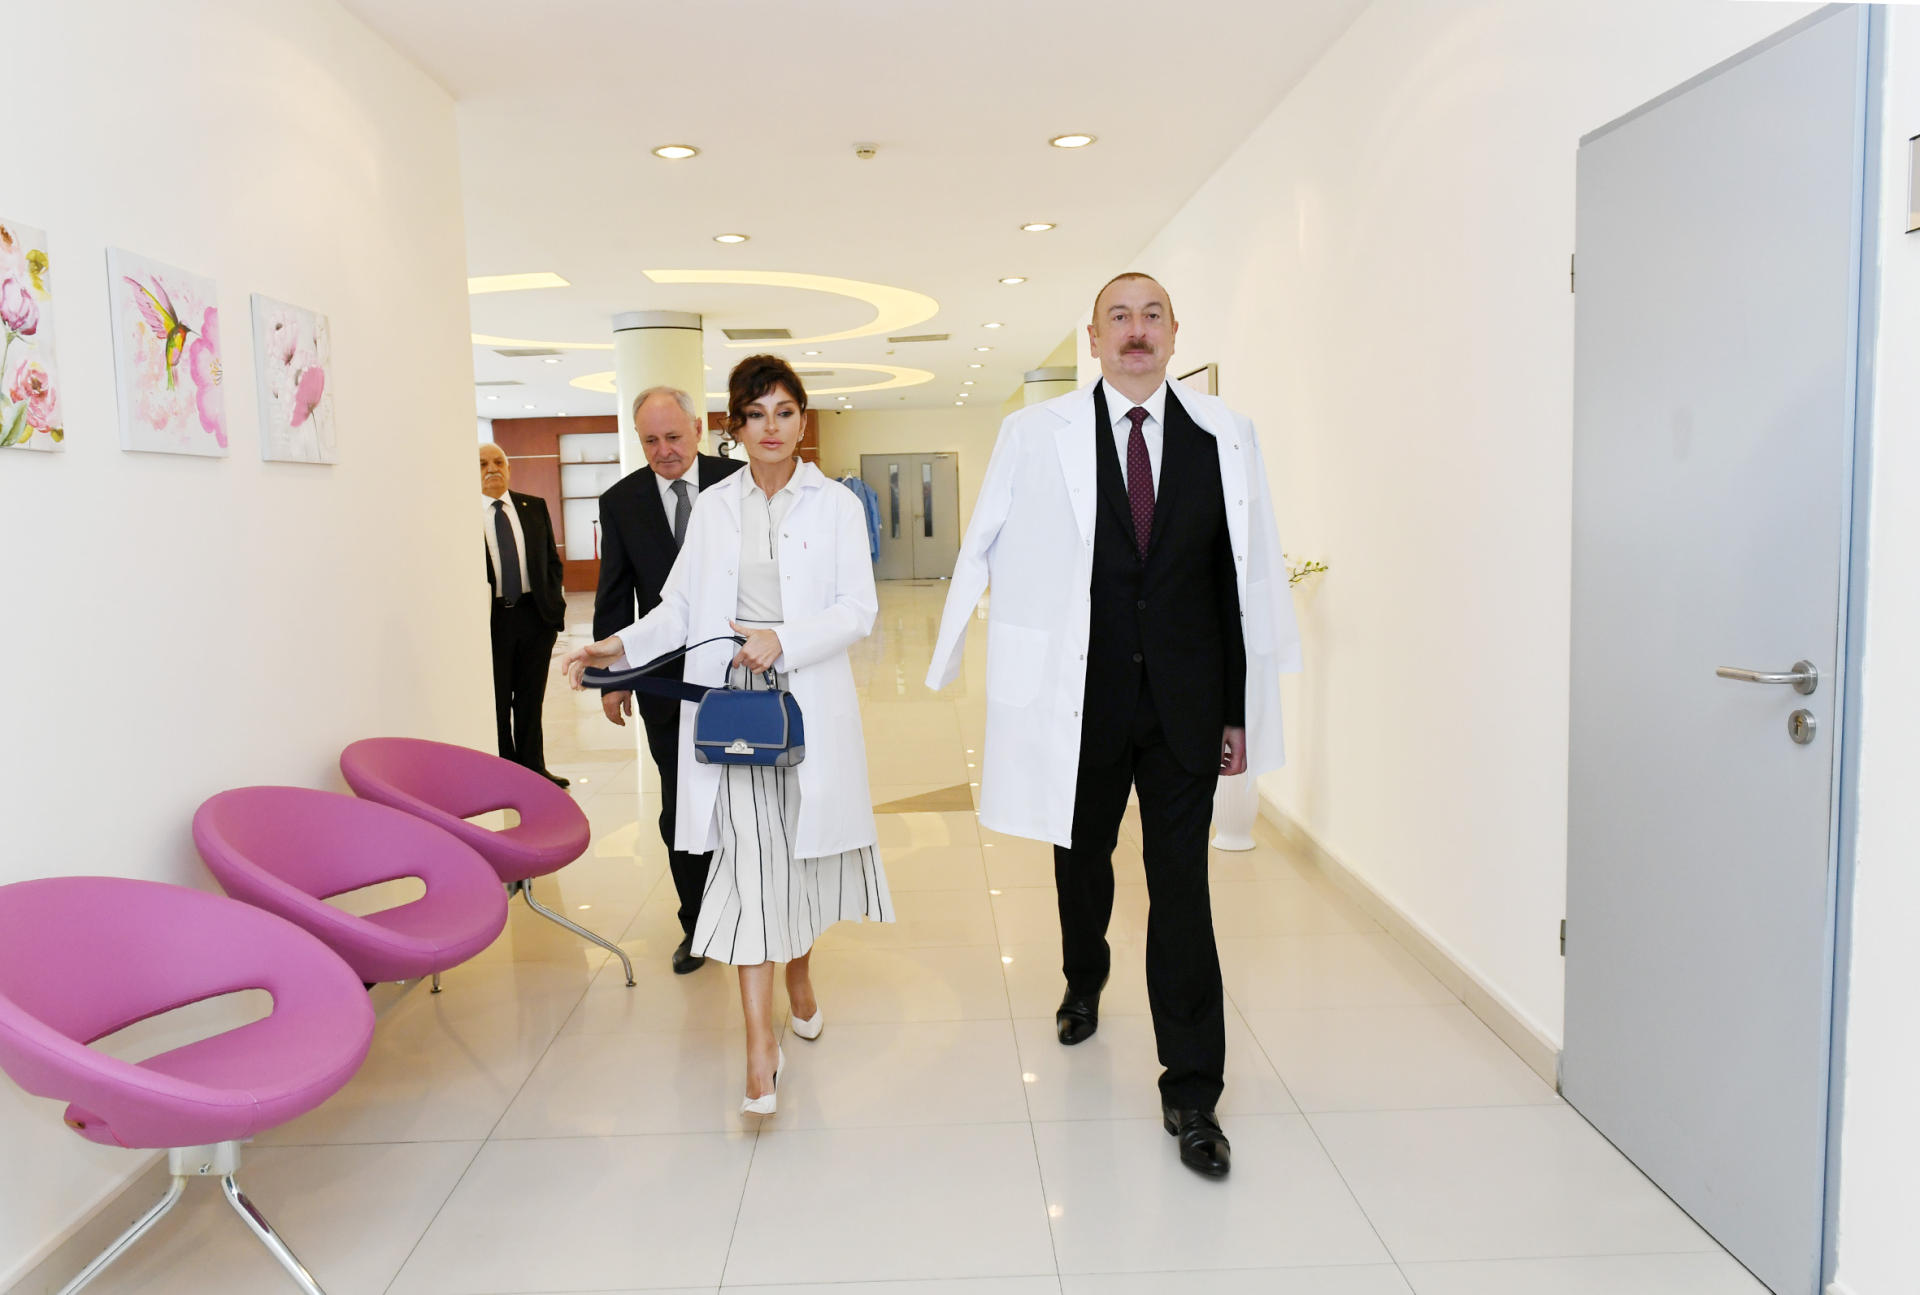 President, first lady meet parents of Azerbaijan’s 10 millionth citizen (PHOTO)